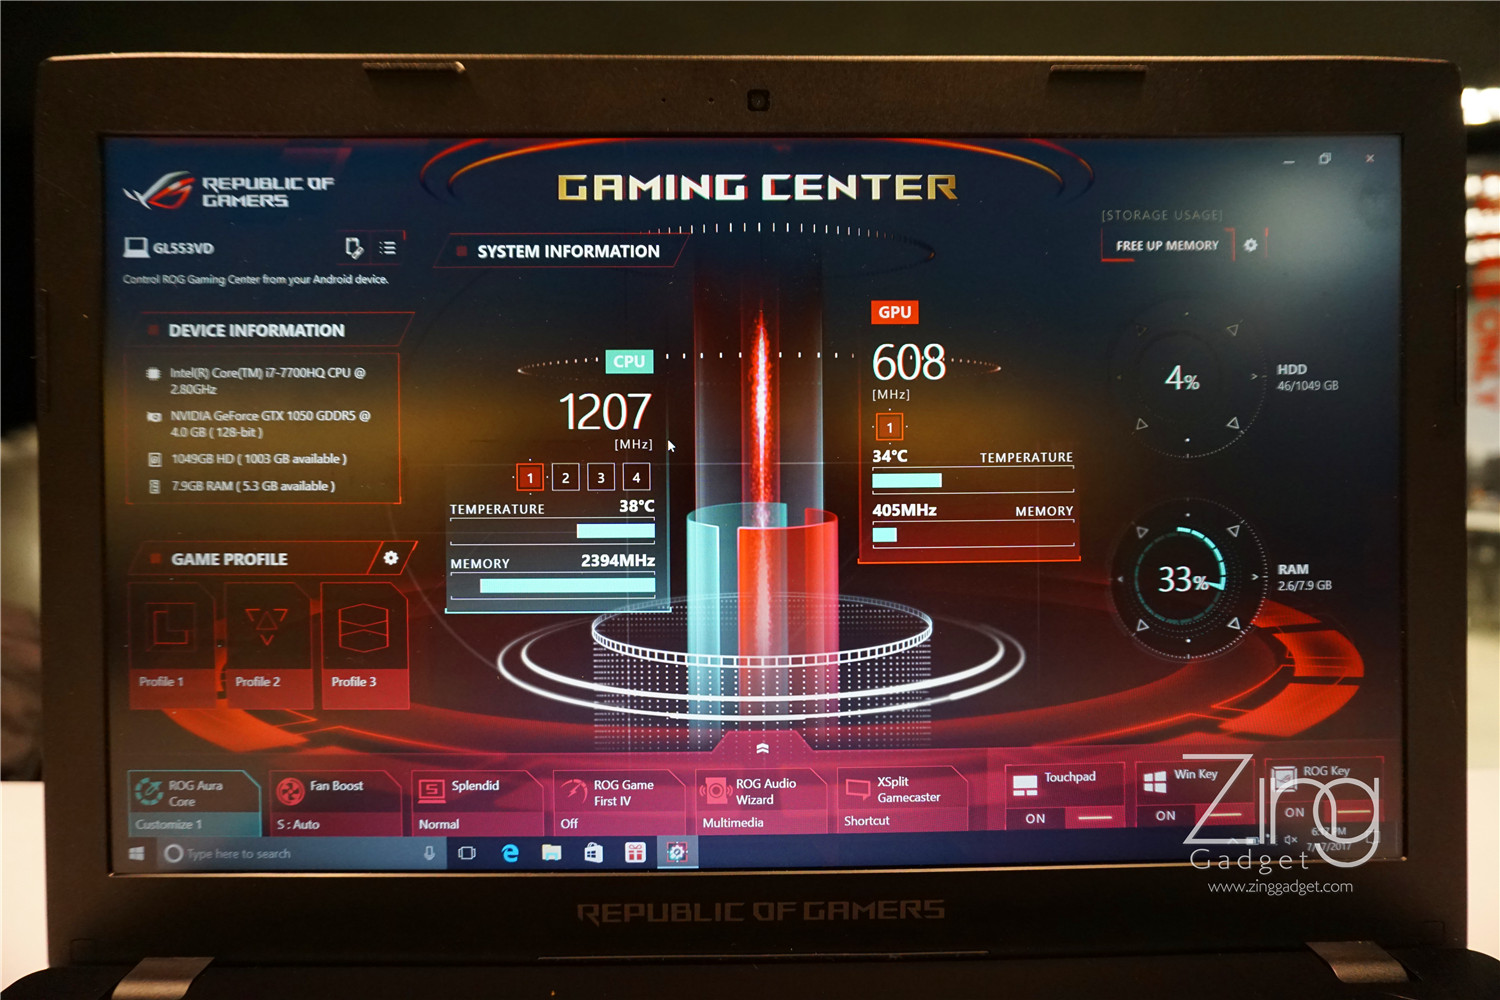 ASUS ROG Strix GL553VD (Intel i7/GTX1050) Budget Gaming Notebook Experience Report - Zing Gadget